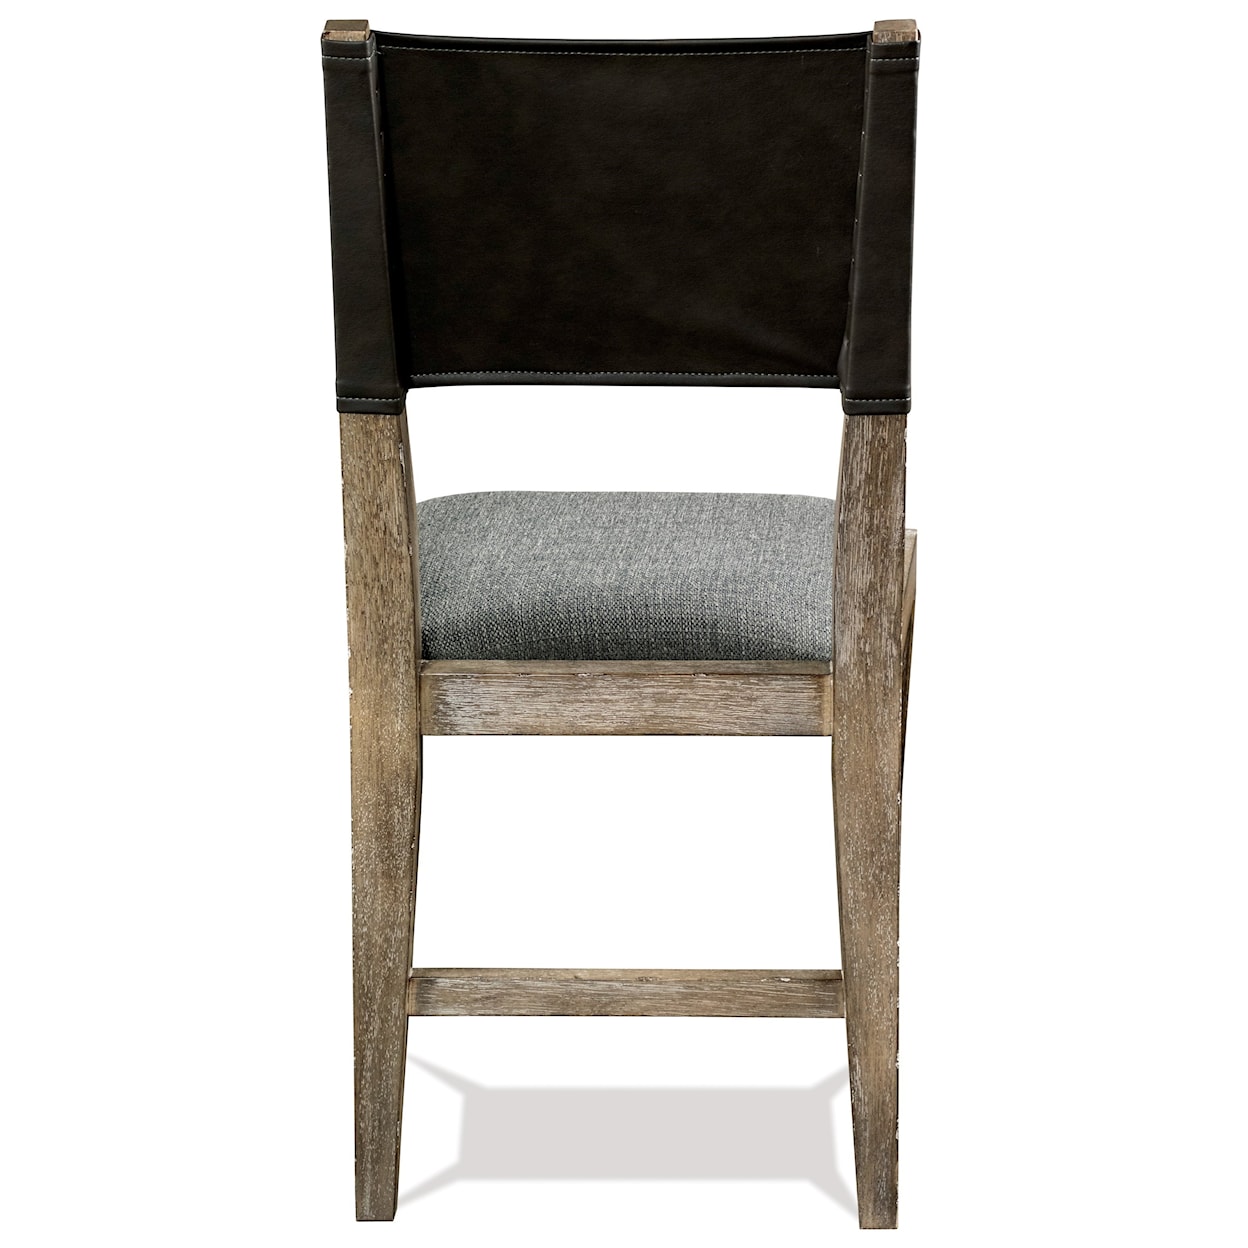 Riverside Furniture Milton Park Upholstered Seat Side Chair